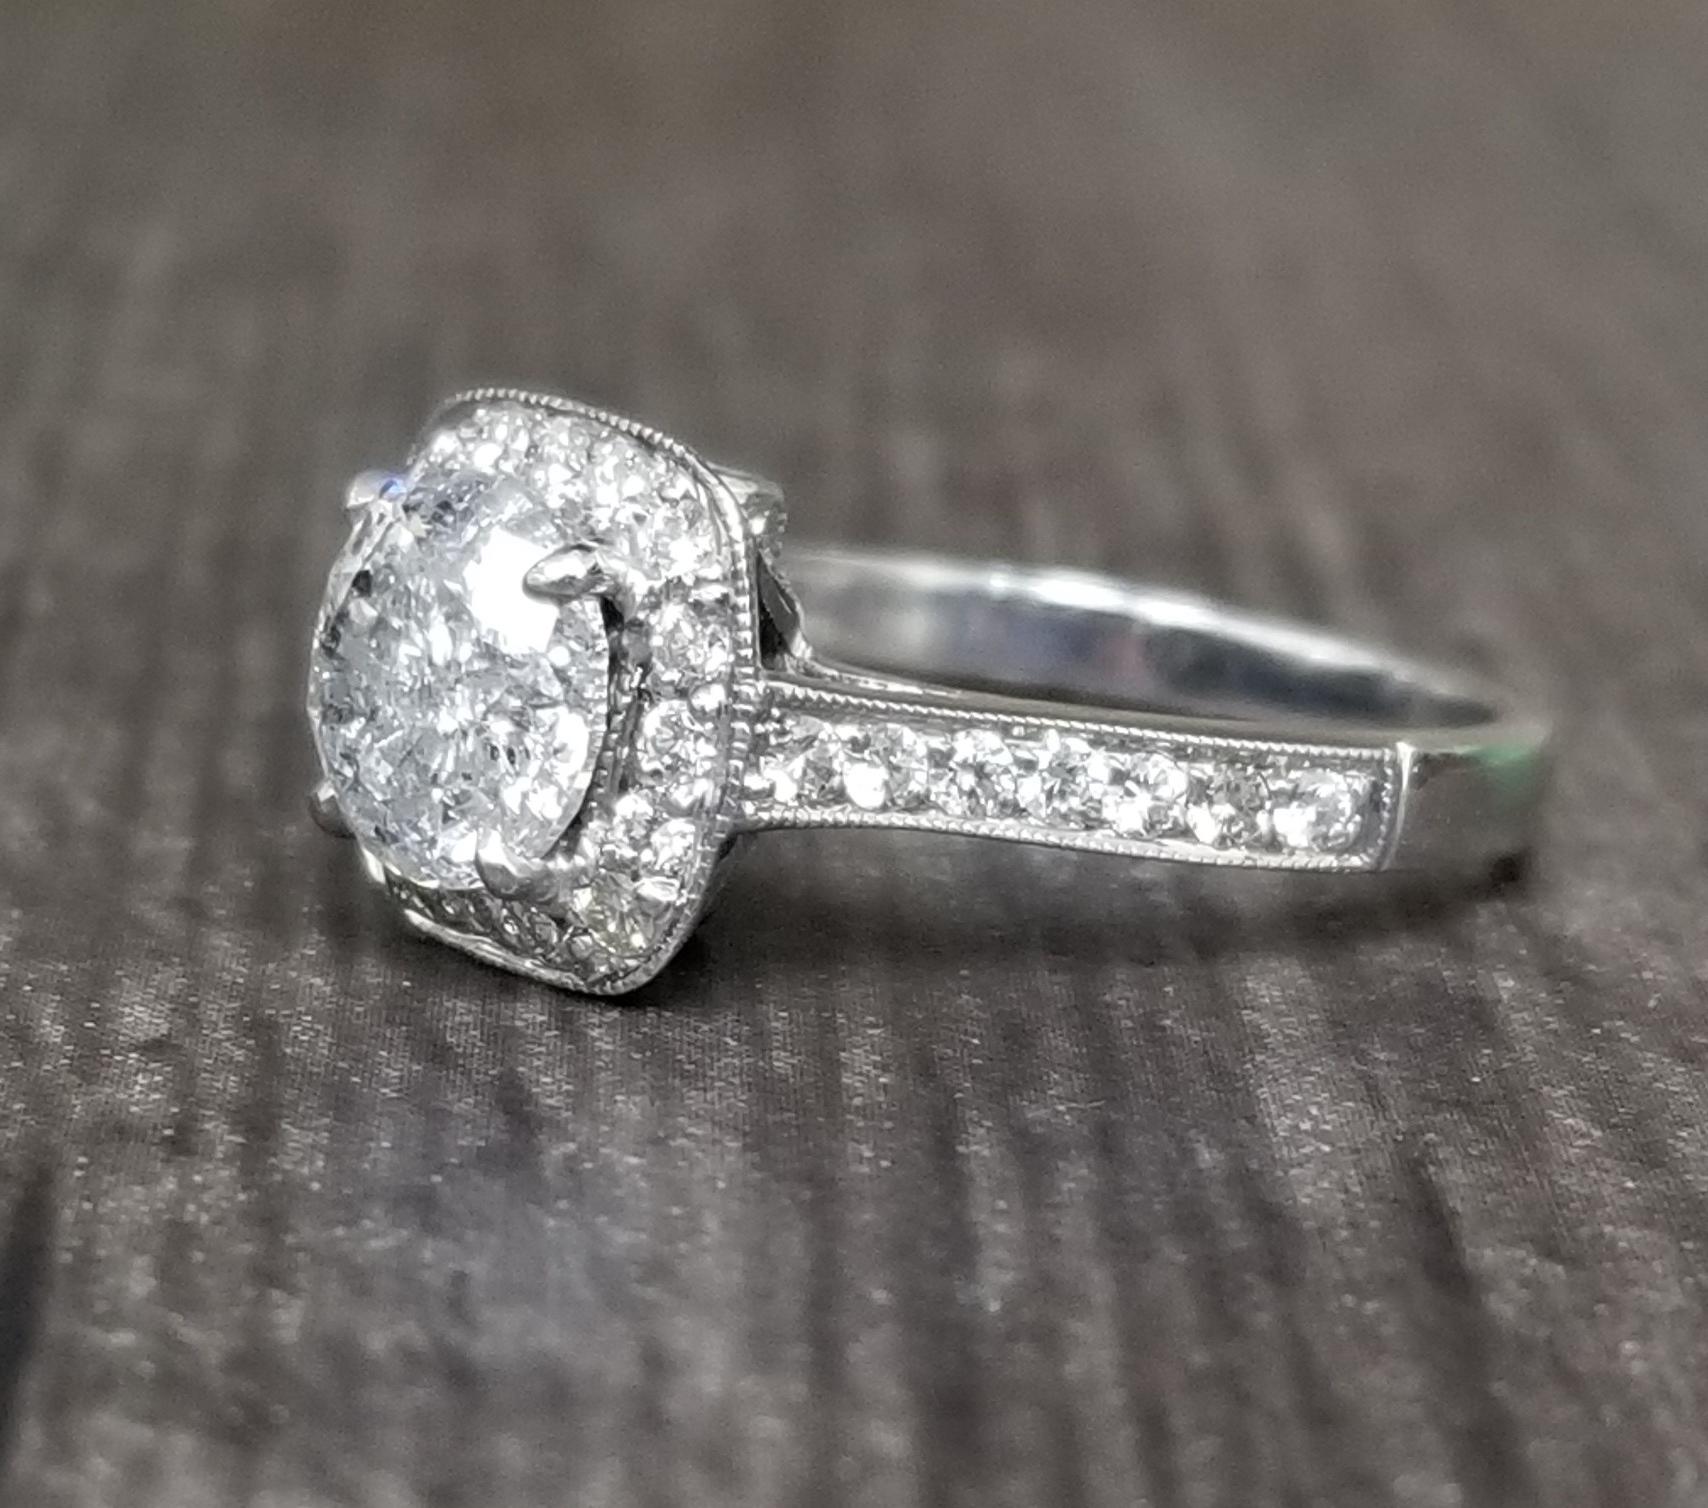 14k white gold ladies diamond halo ring containing 1 brilliant cut diamond; color 